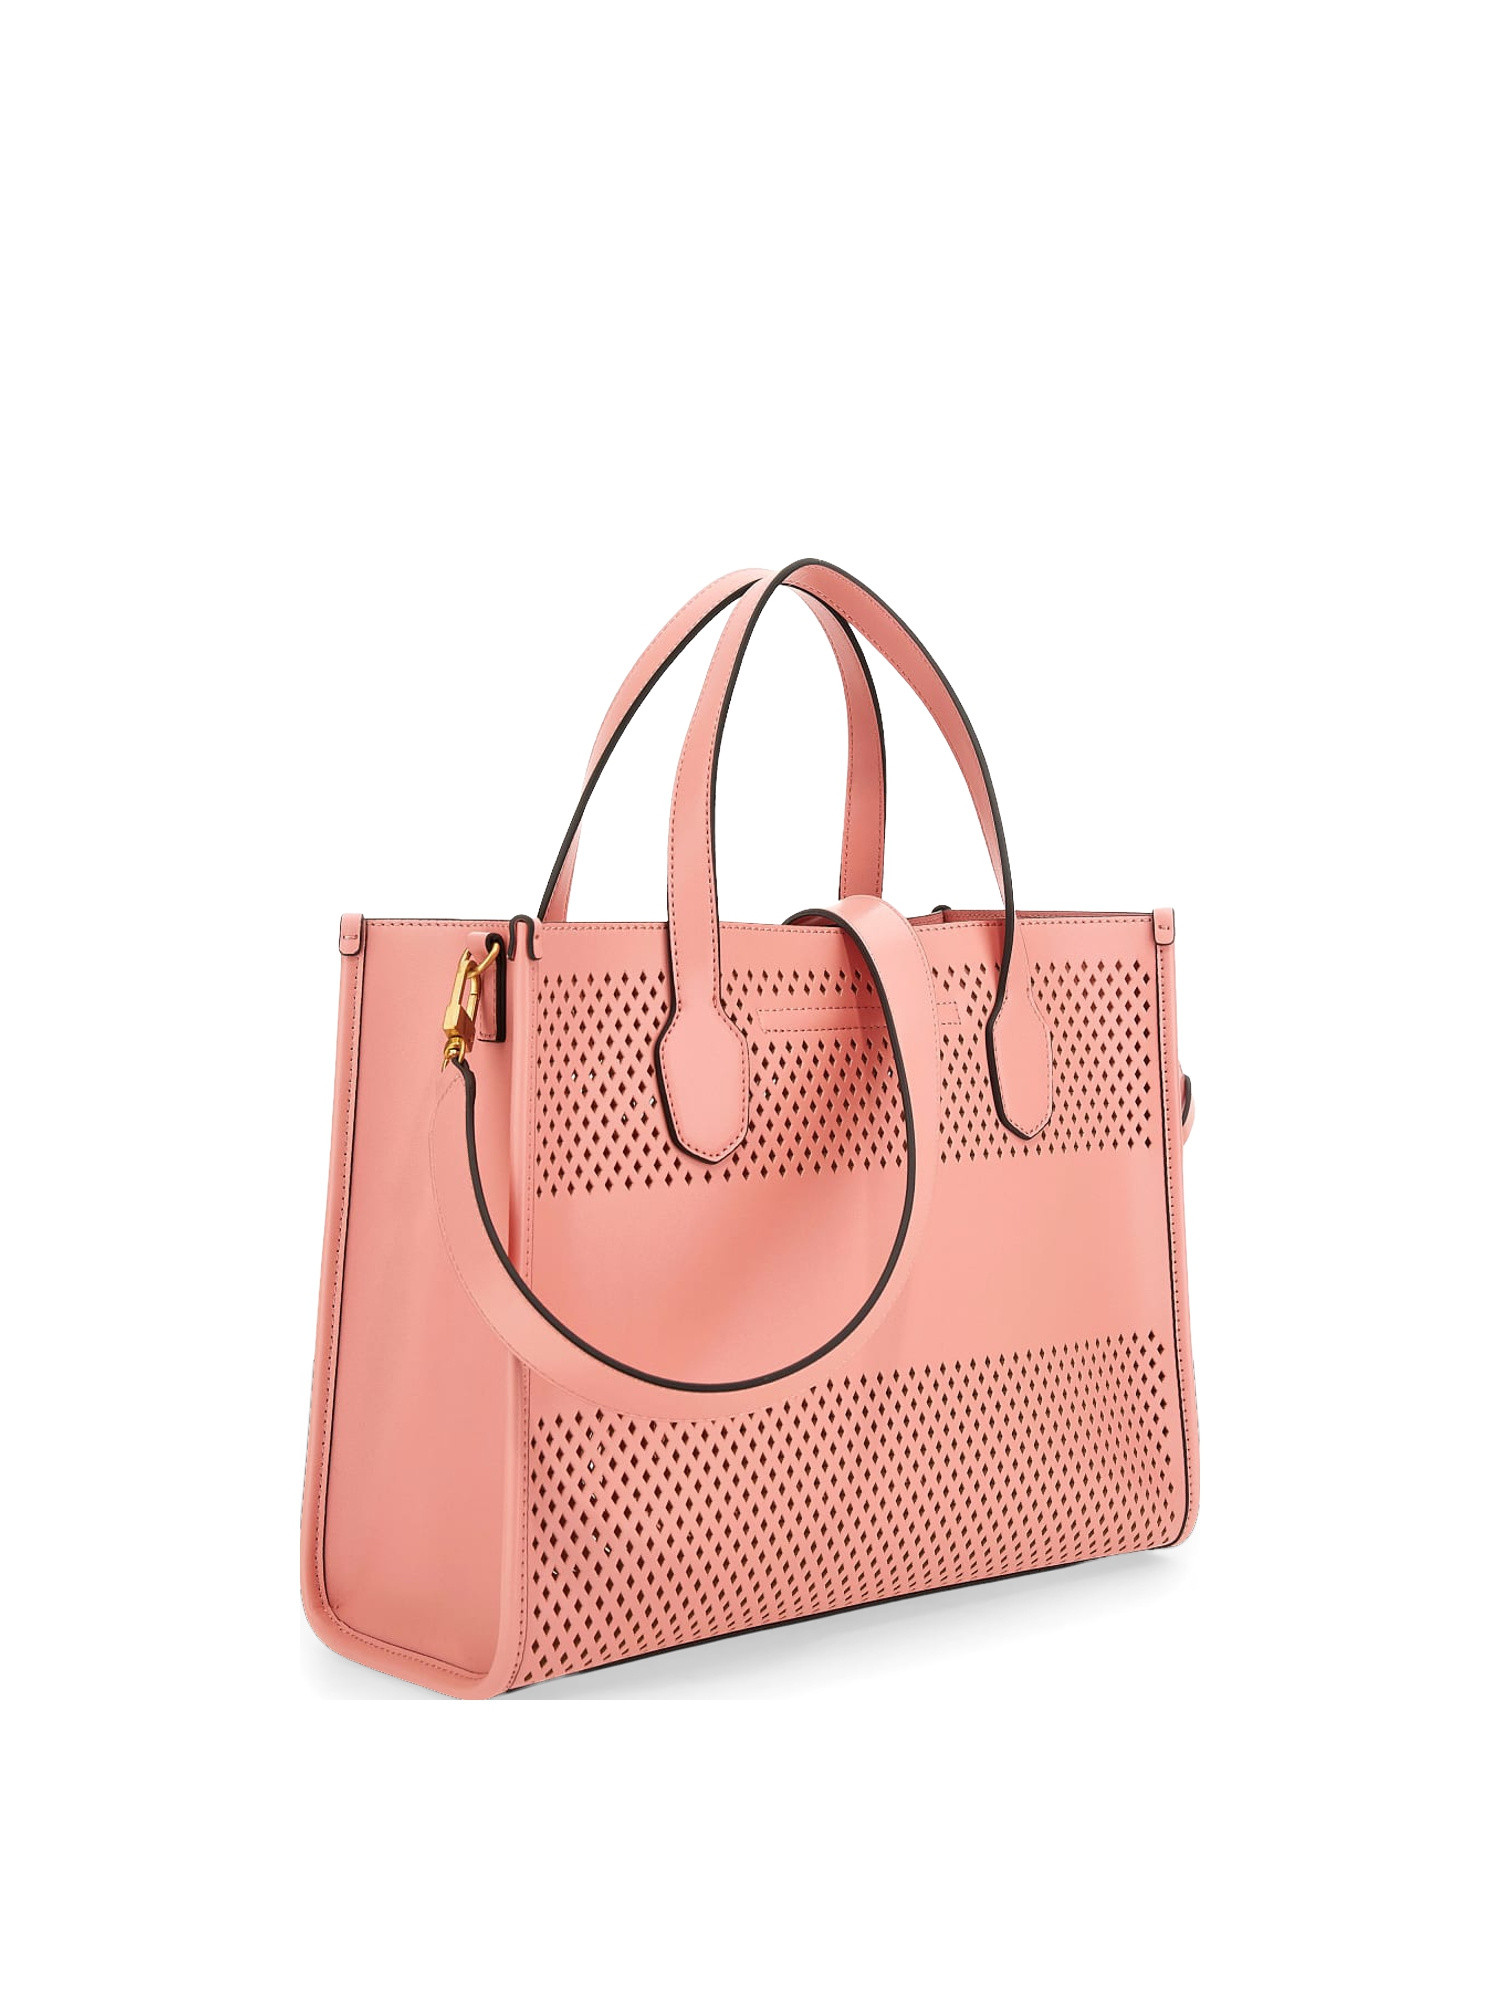 Guess - Katey perforated handbag, Pink, large image number 1